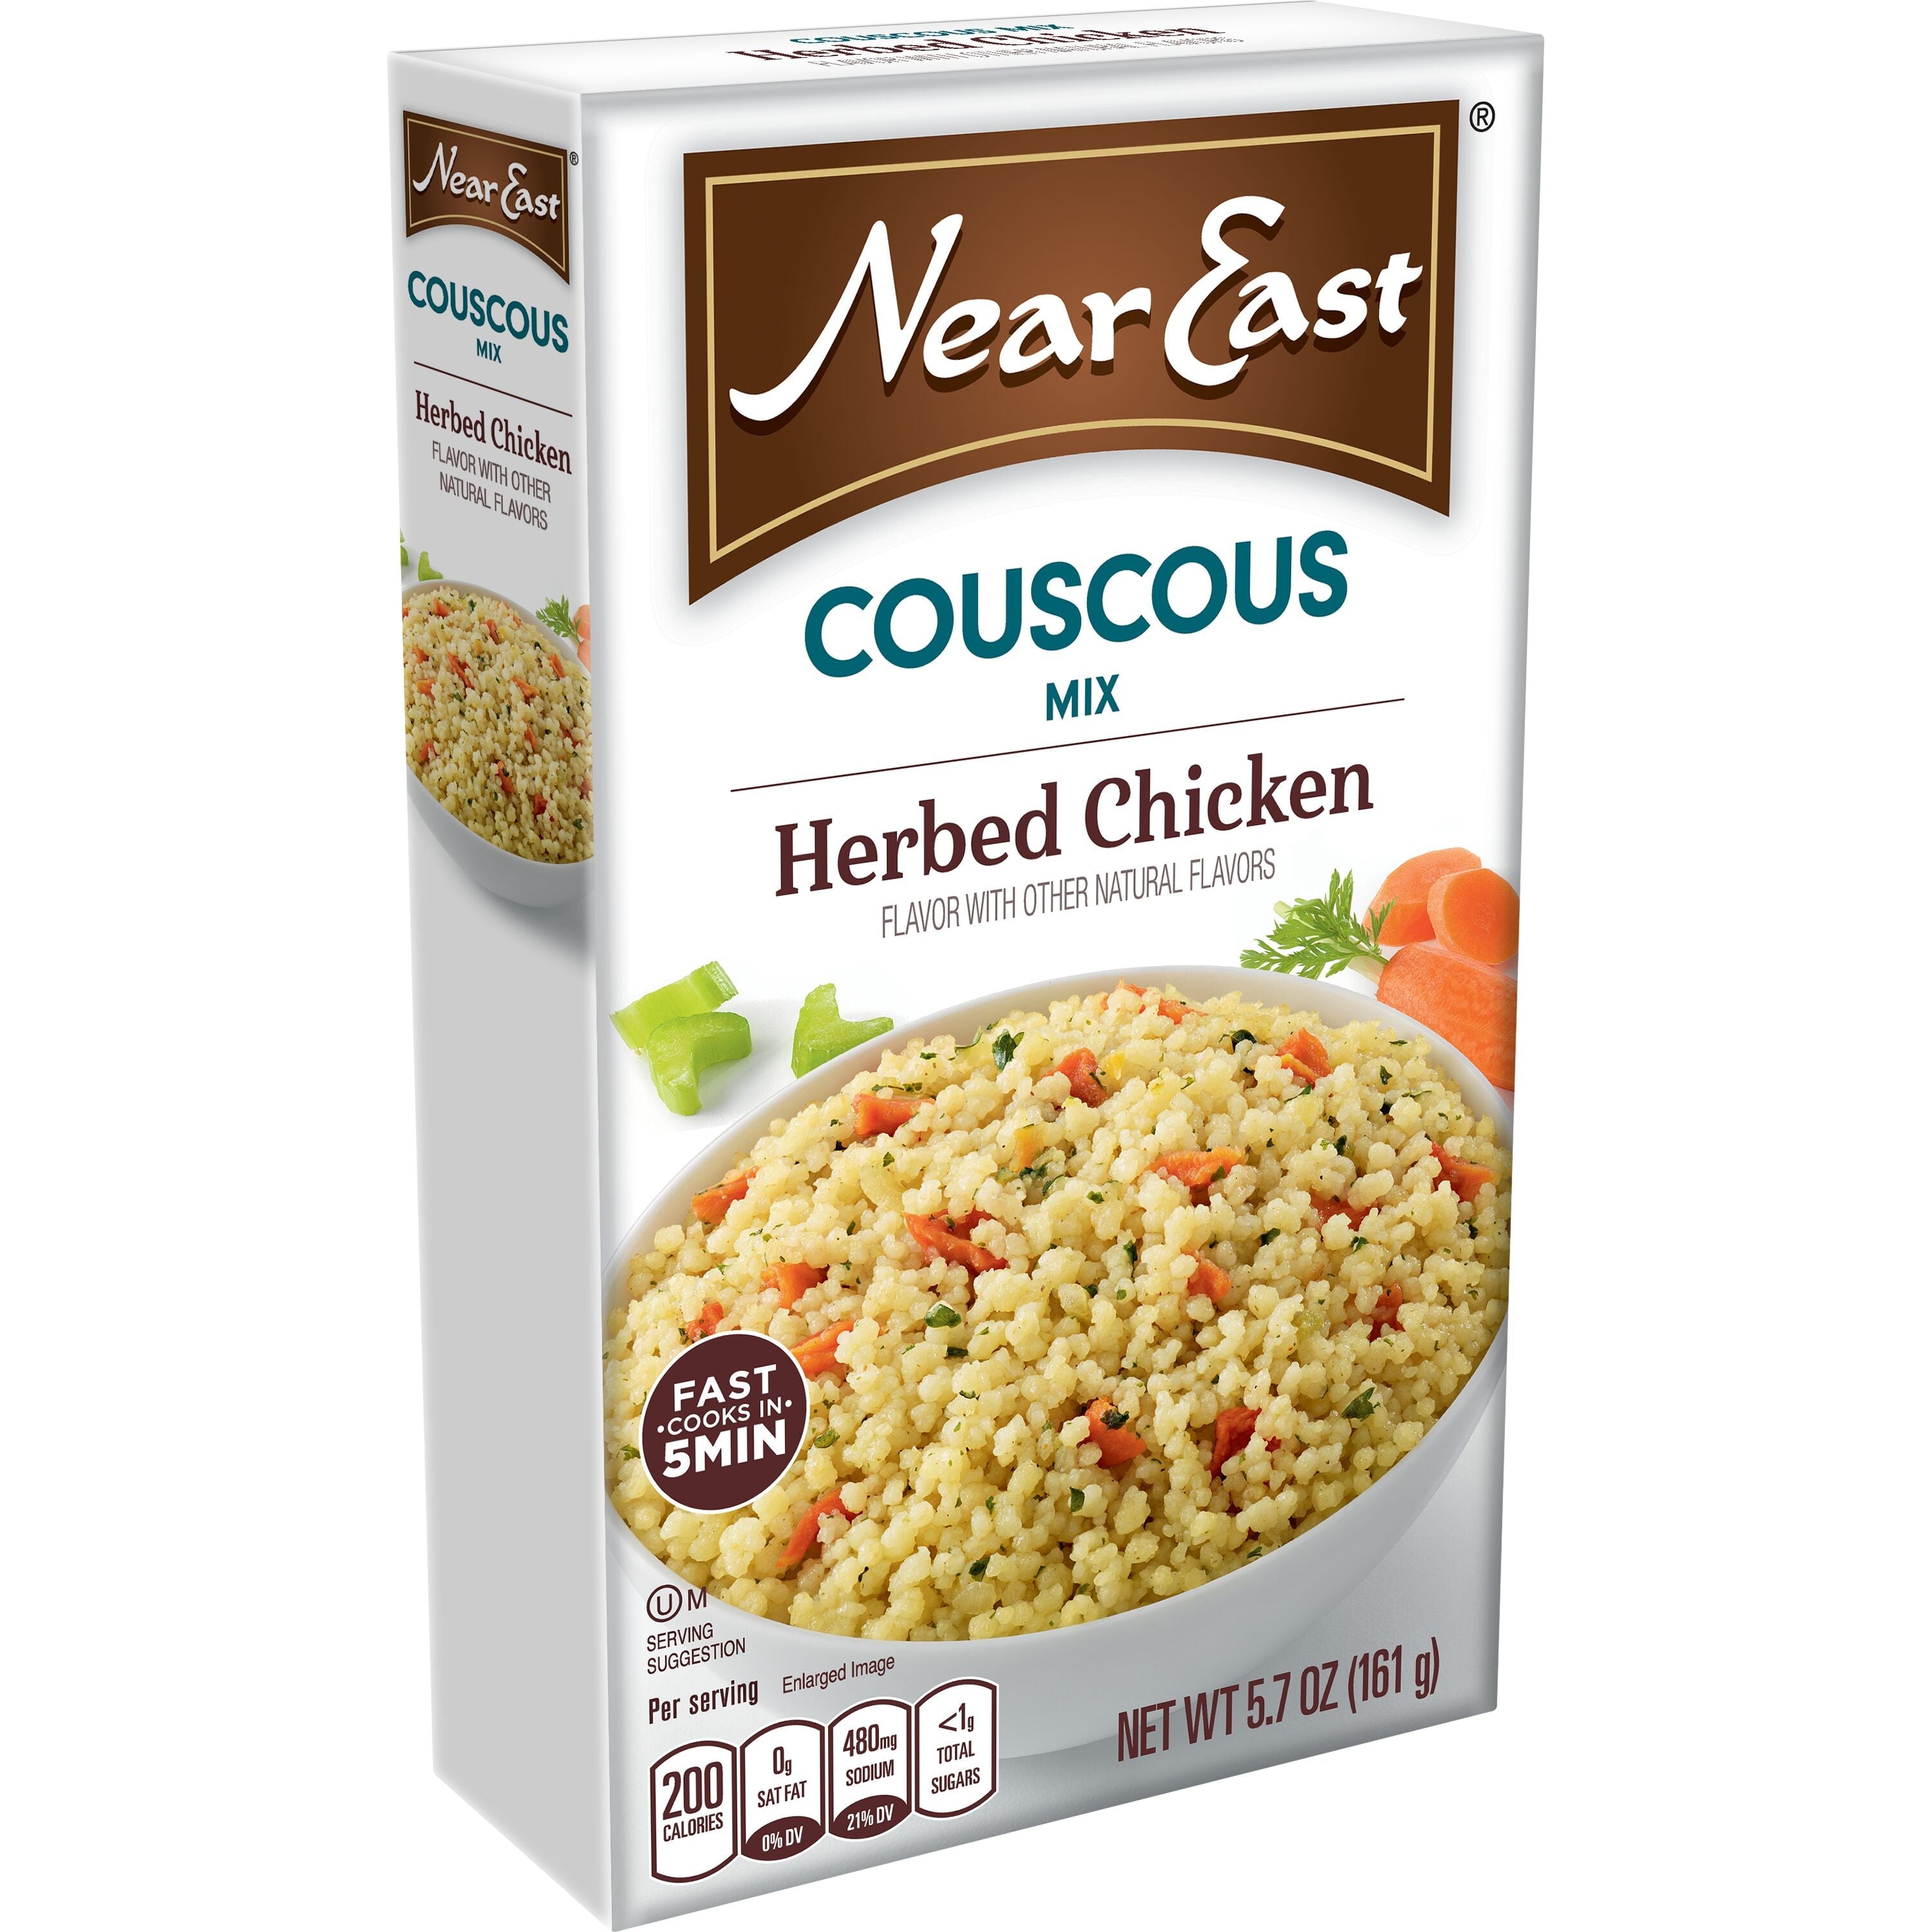 Near East Couscous Mix Herb Chicken 5.7 oz